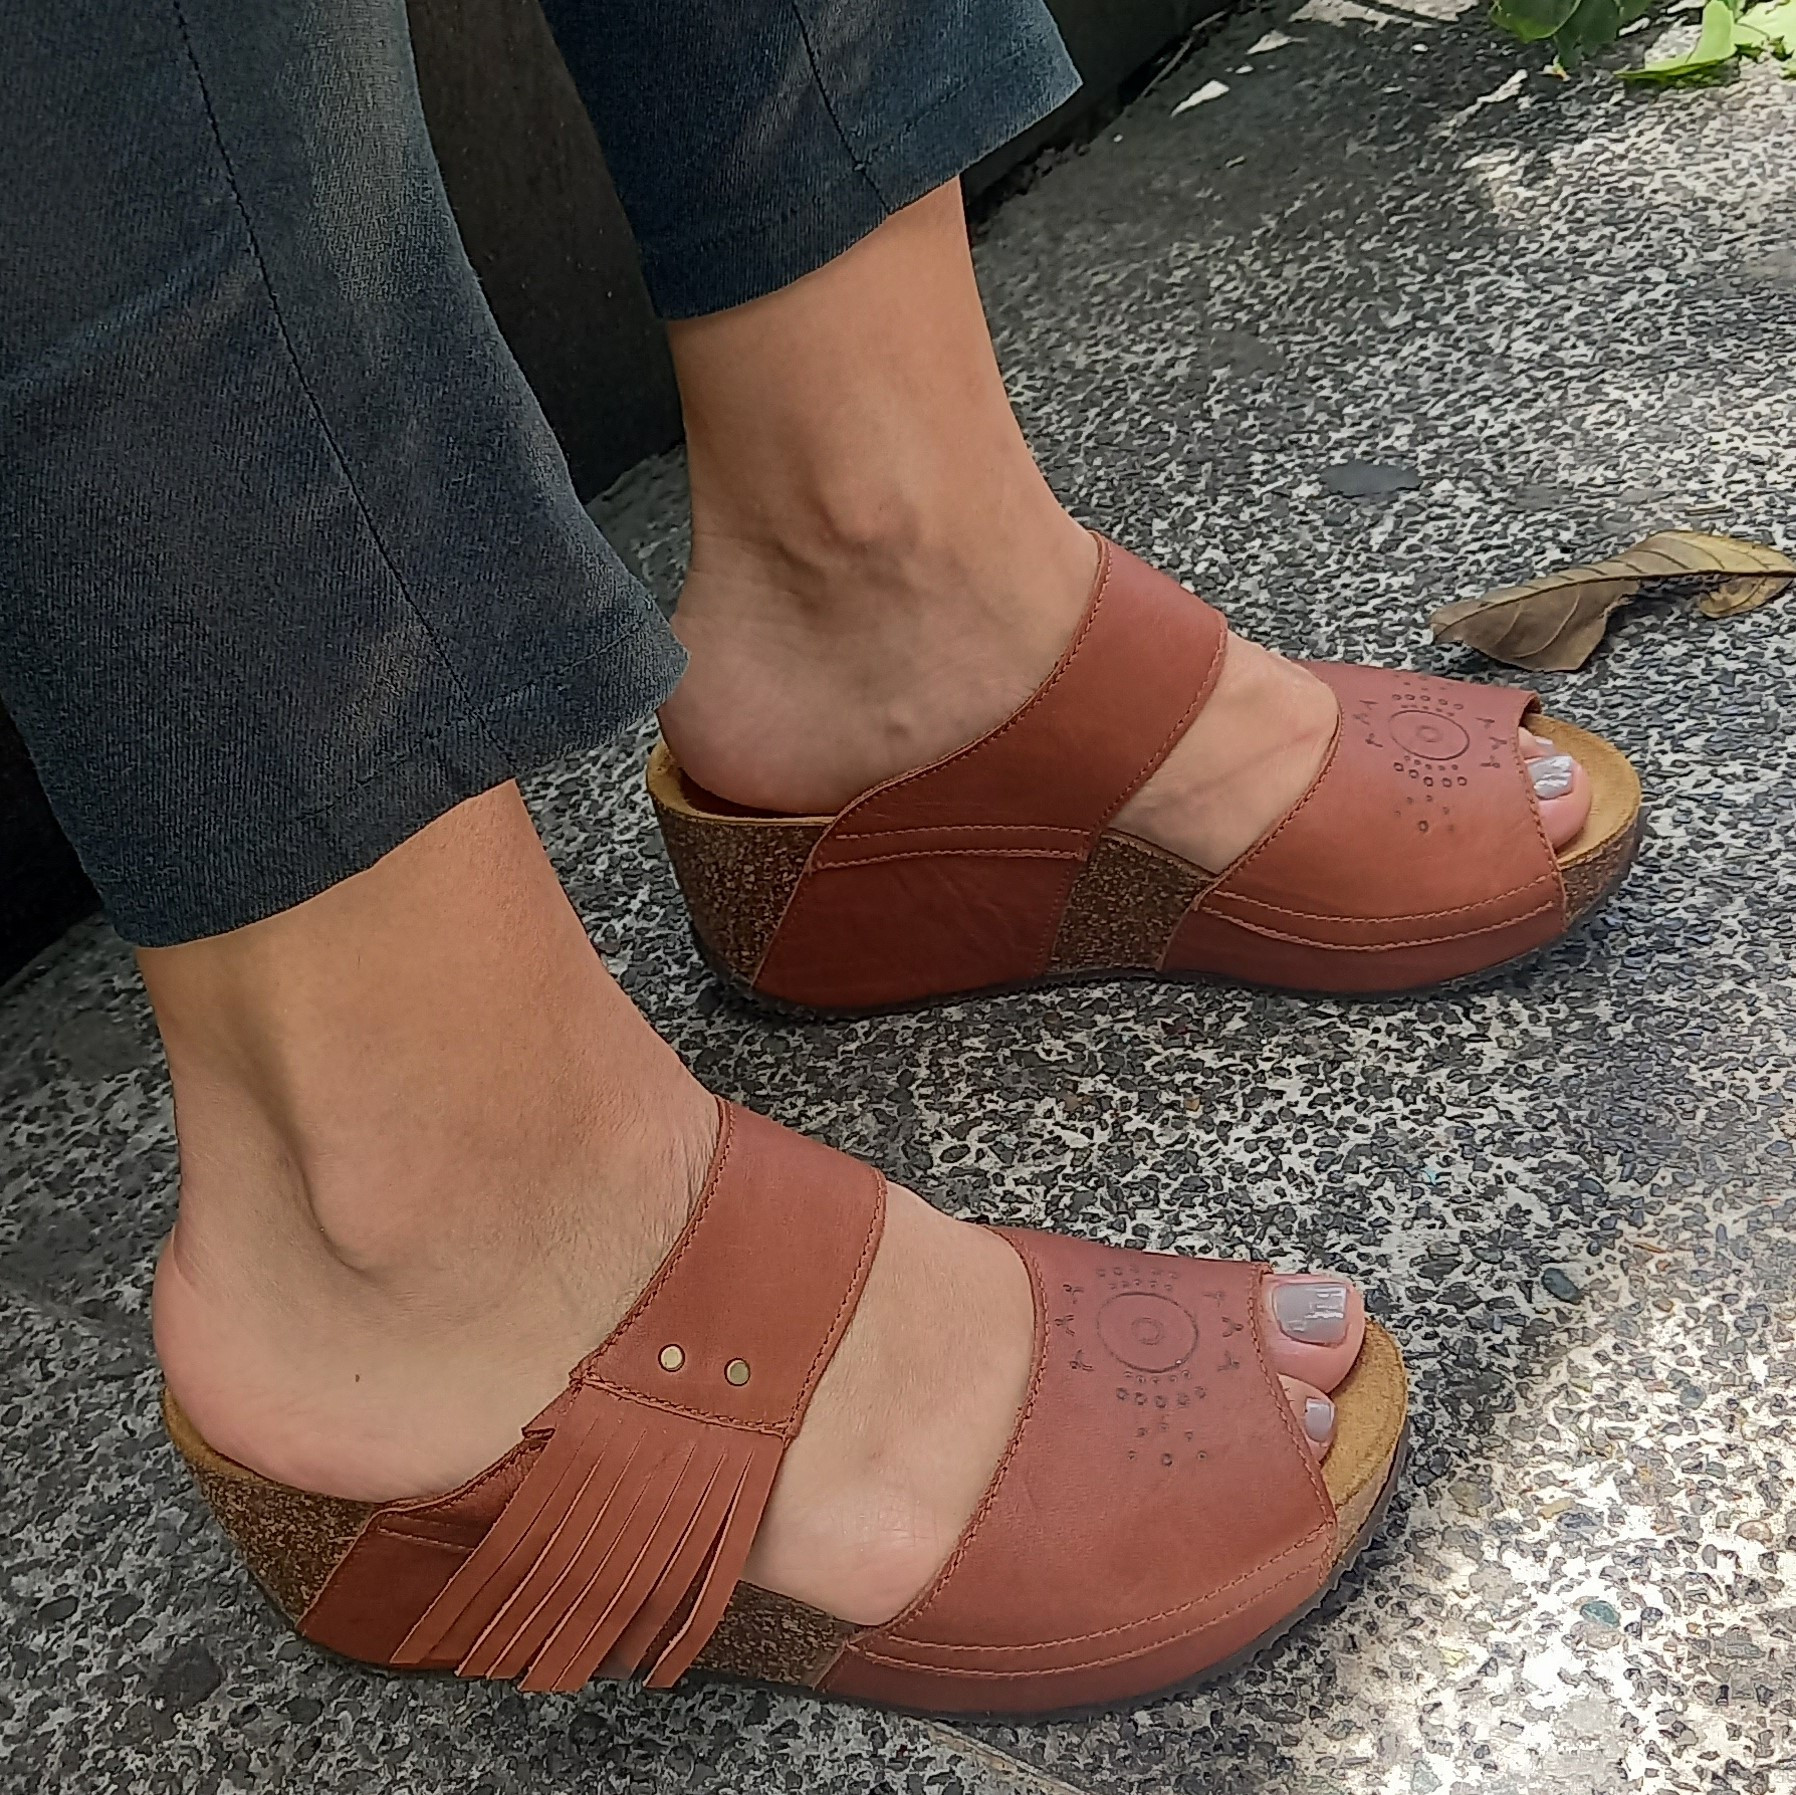 Sandalia corcho: calzado passoalegre